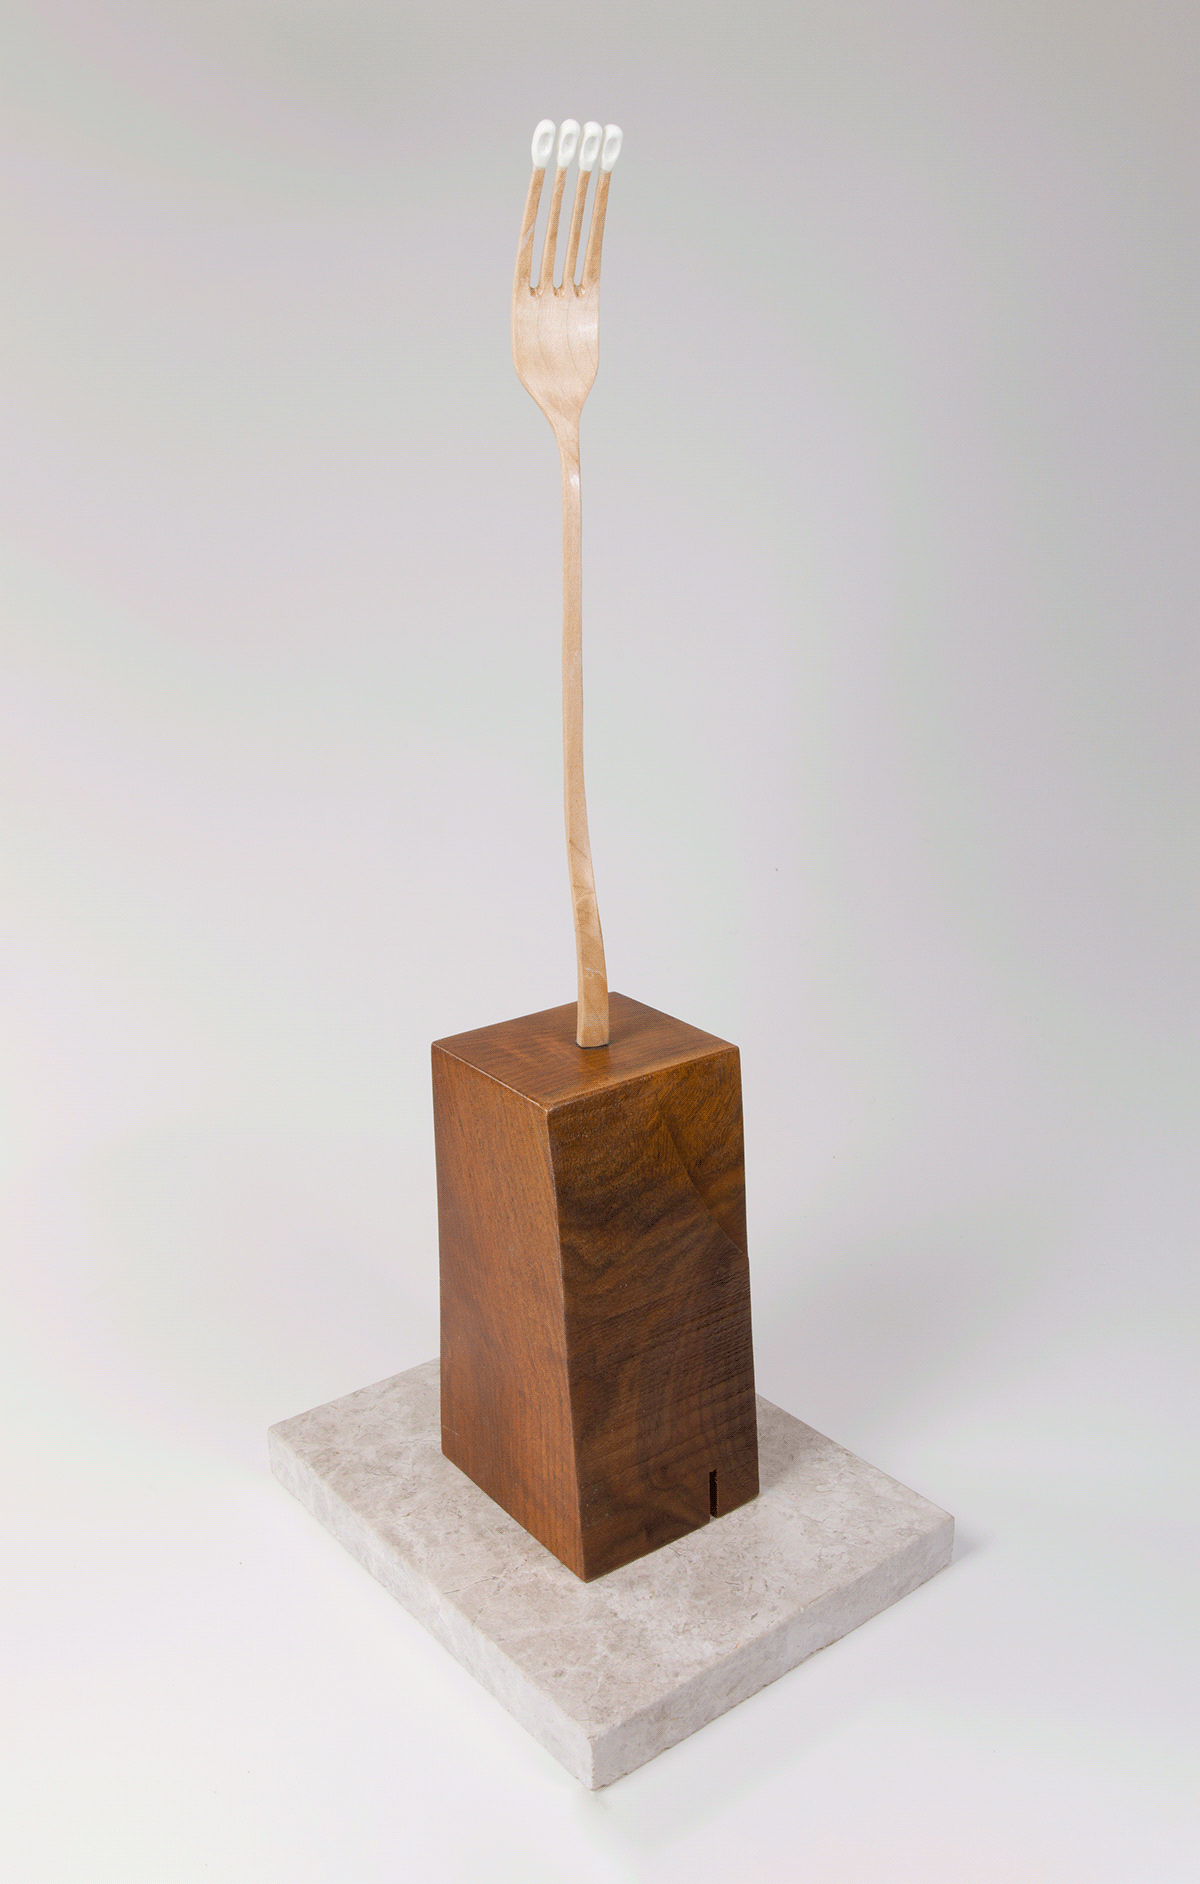 sculpture spoon design wood working  graphic design  art package design  Exhibition  Photography 